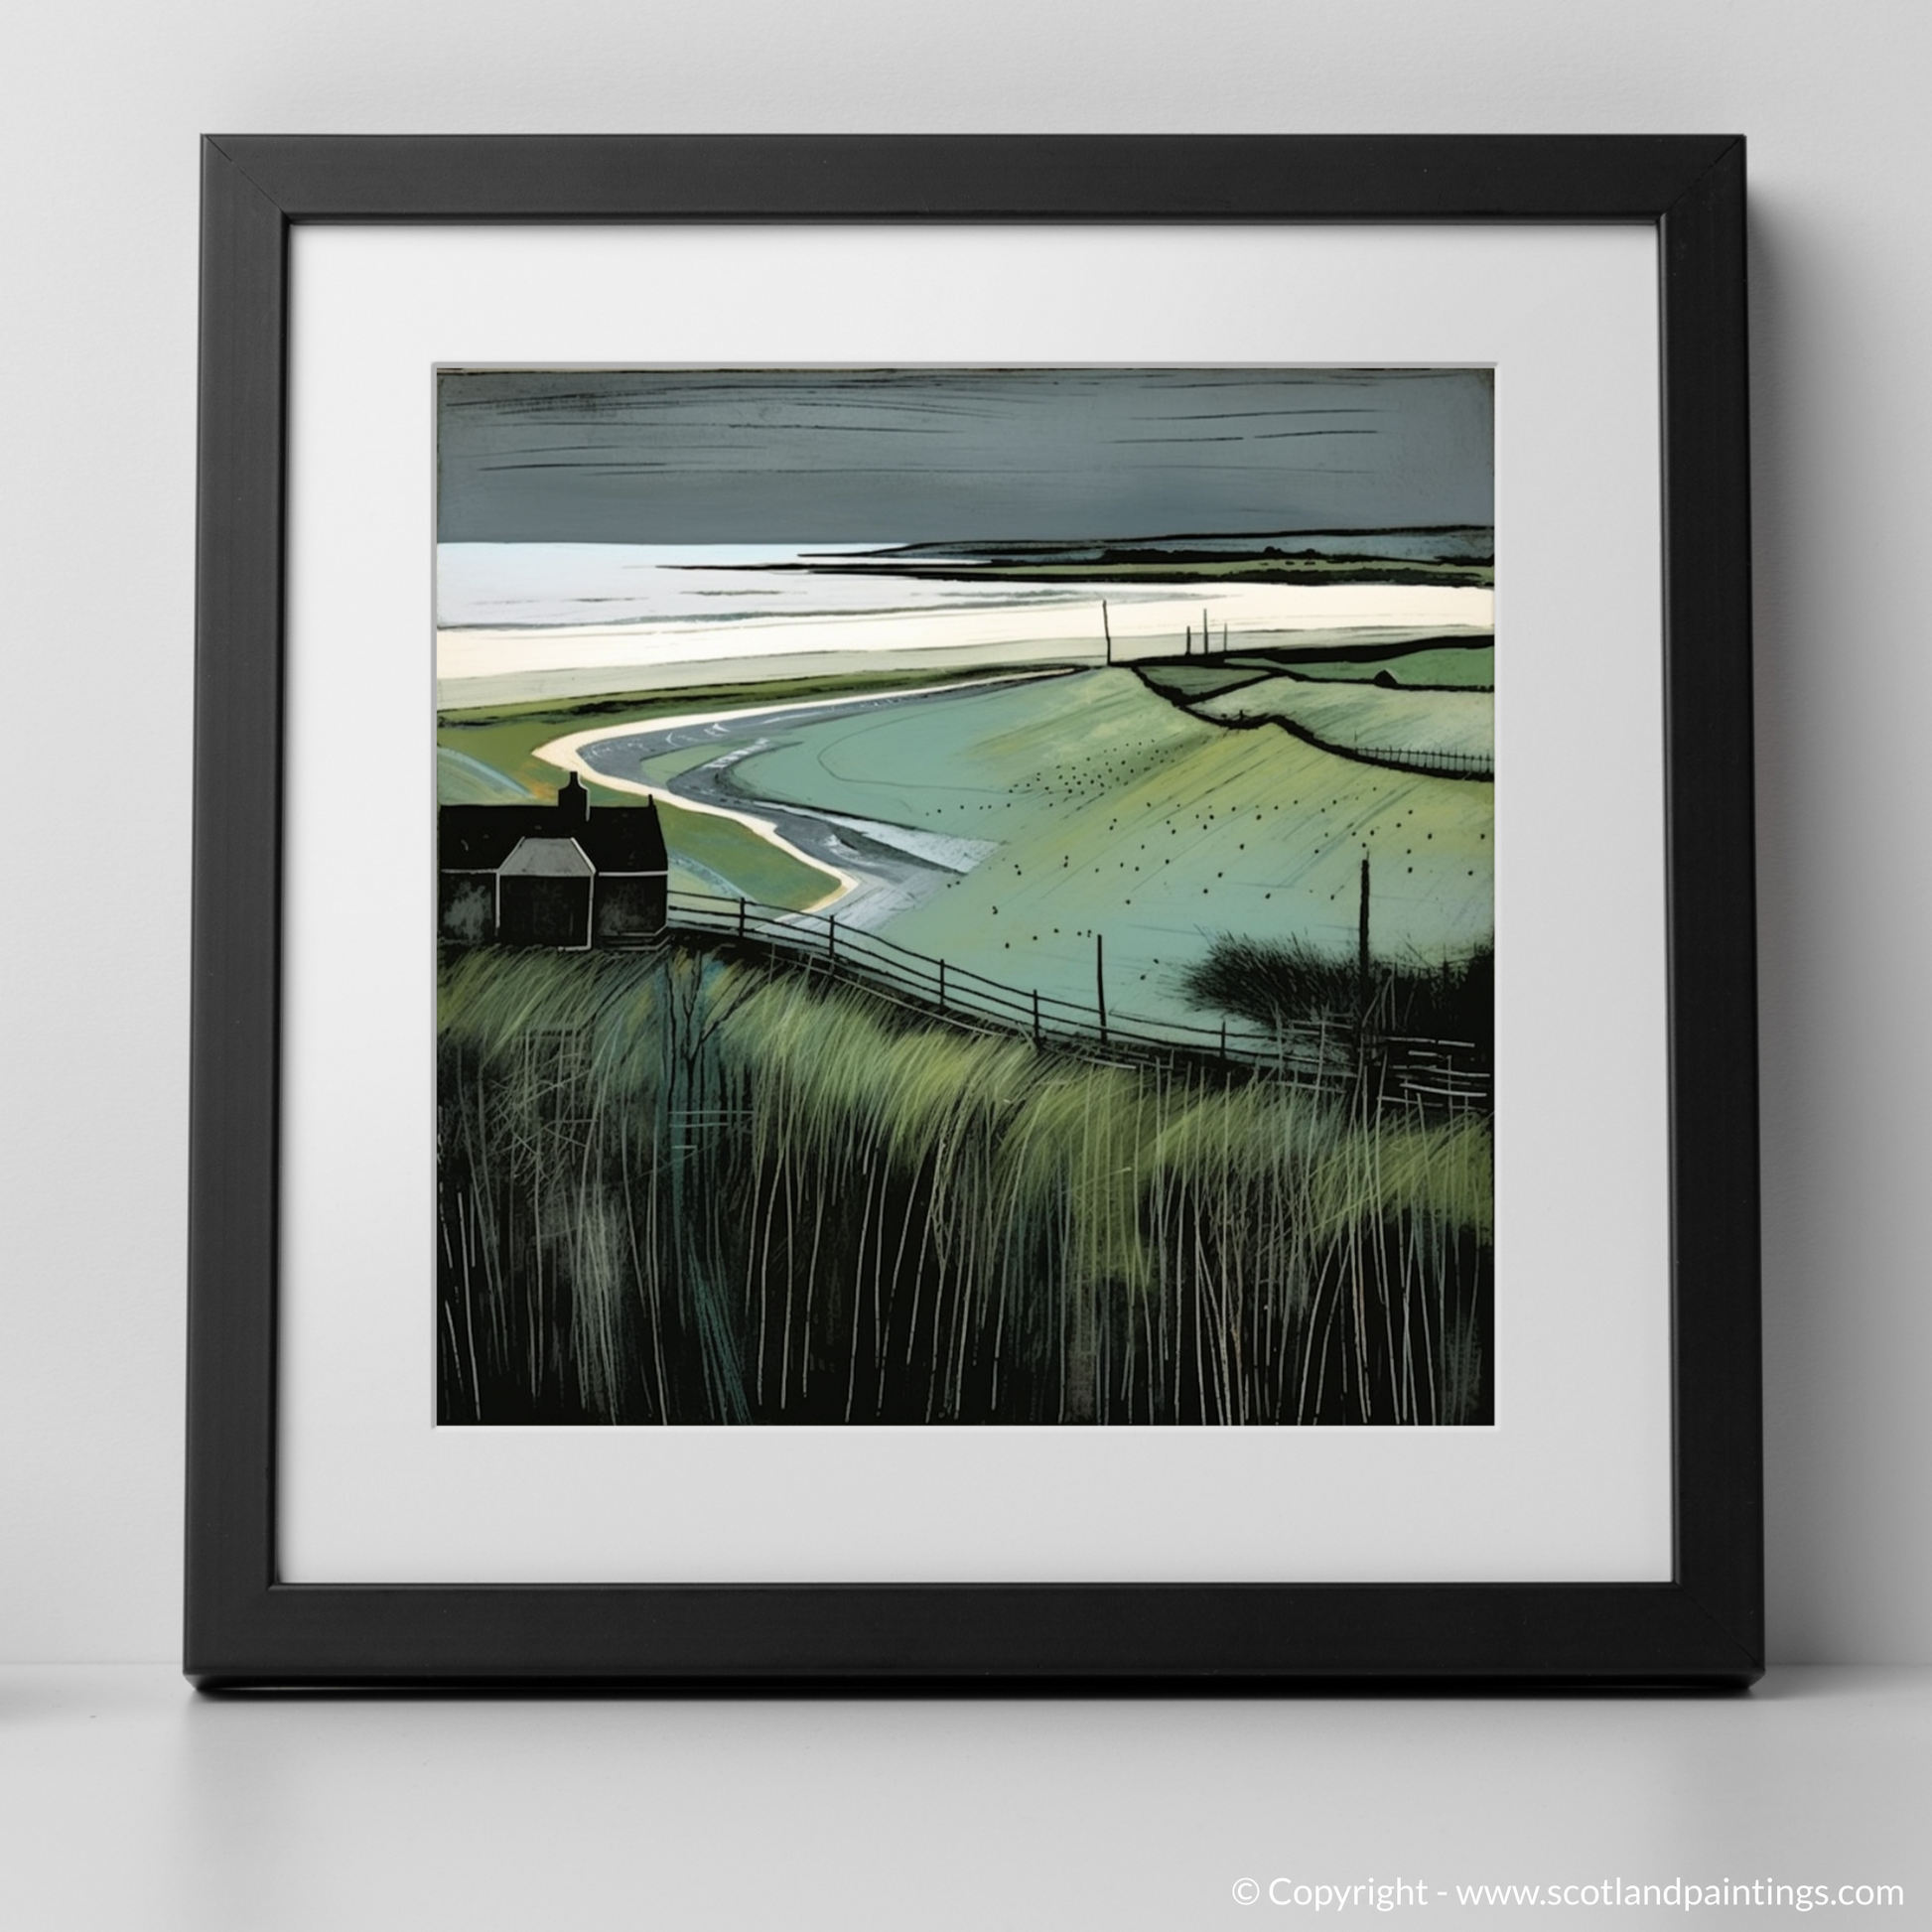 Art Print of Lunan Bay, Angus with a black frame